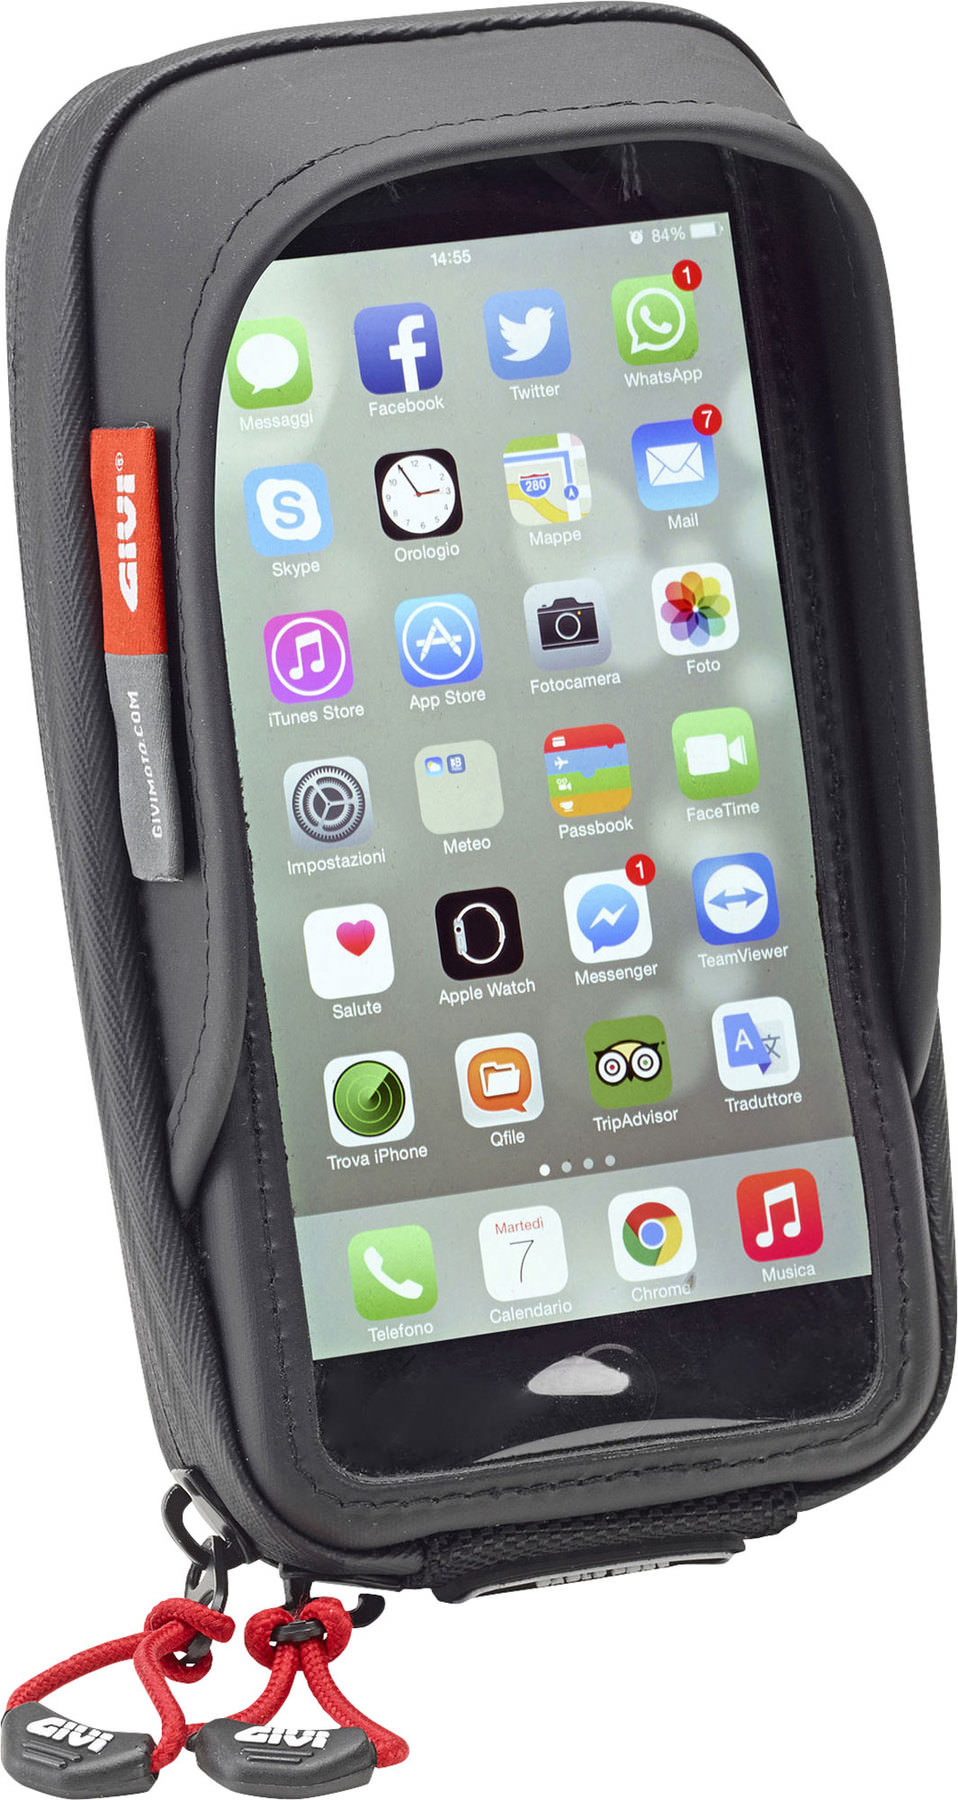 GPS Navigation Sunshade Waterproof Bike Phone Mount Bag Bicycle Frame Bike Handlebar Case for iPhone Xs Max/iPhone XR/Samsung Galaxy S10 Huawei P30 OnePlus 7 S10 Plus/Huawei Mate 20 6T